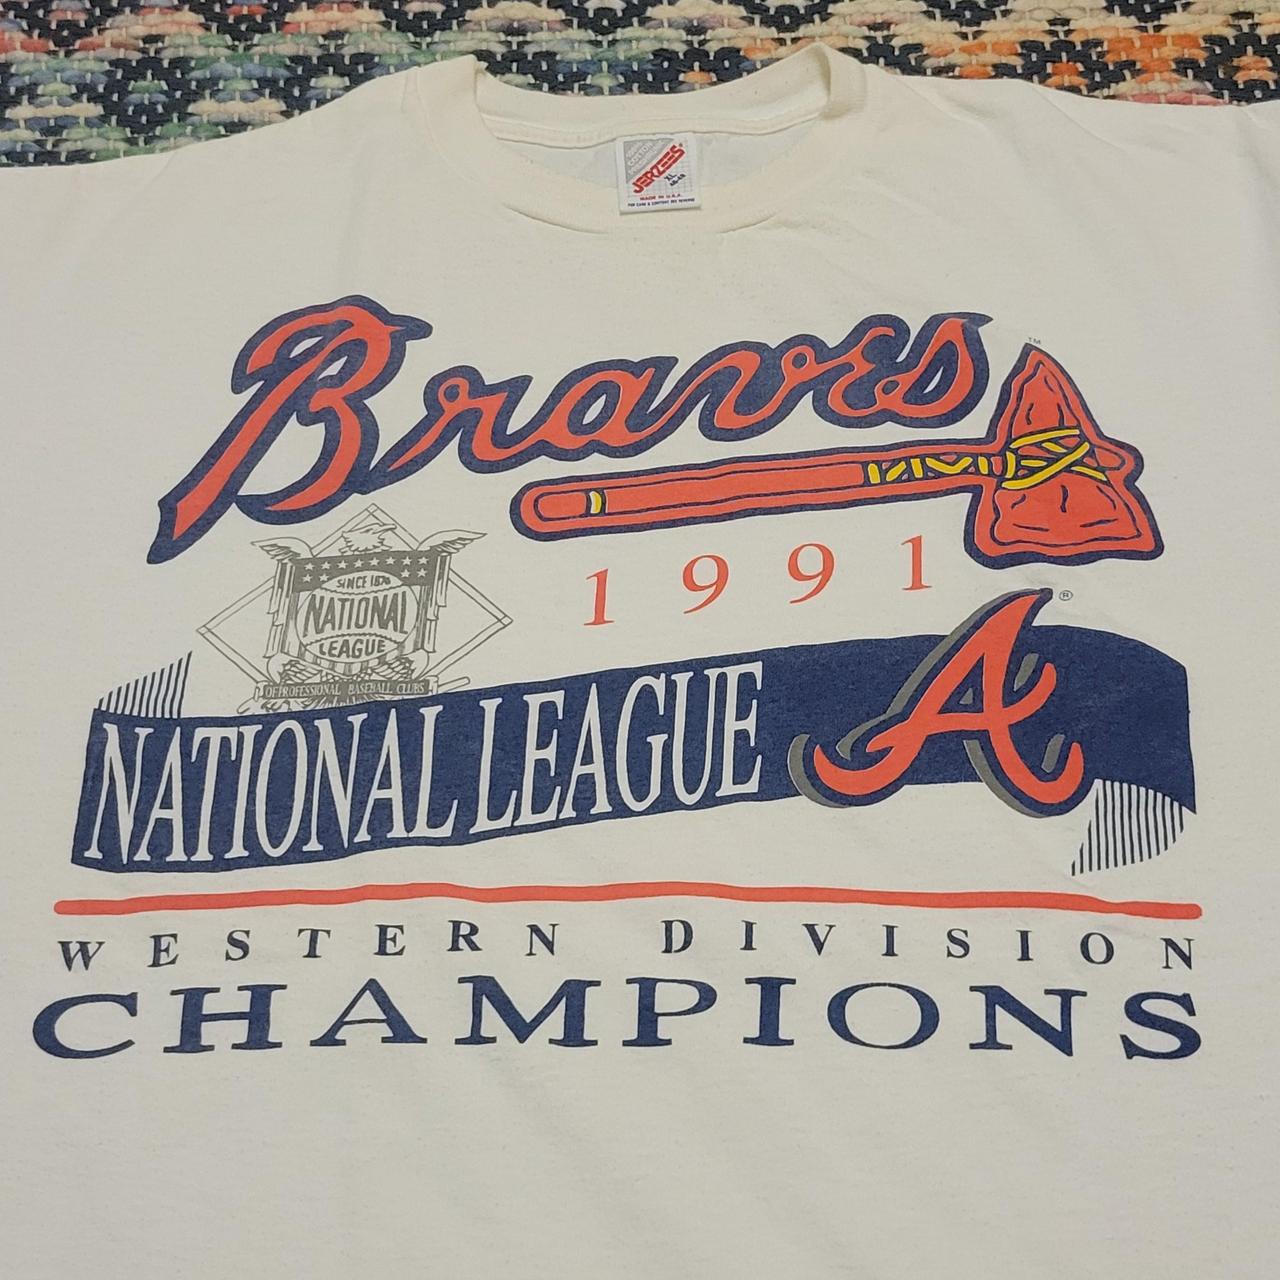 ATL VINTAGE BASEBALL - Atlanta Braves - T-Shirt